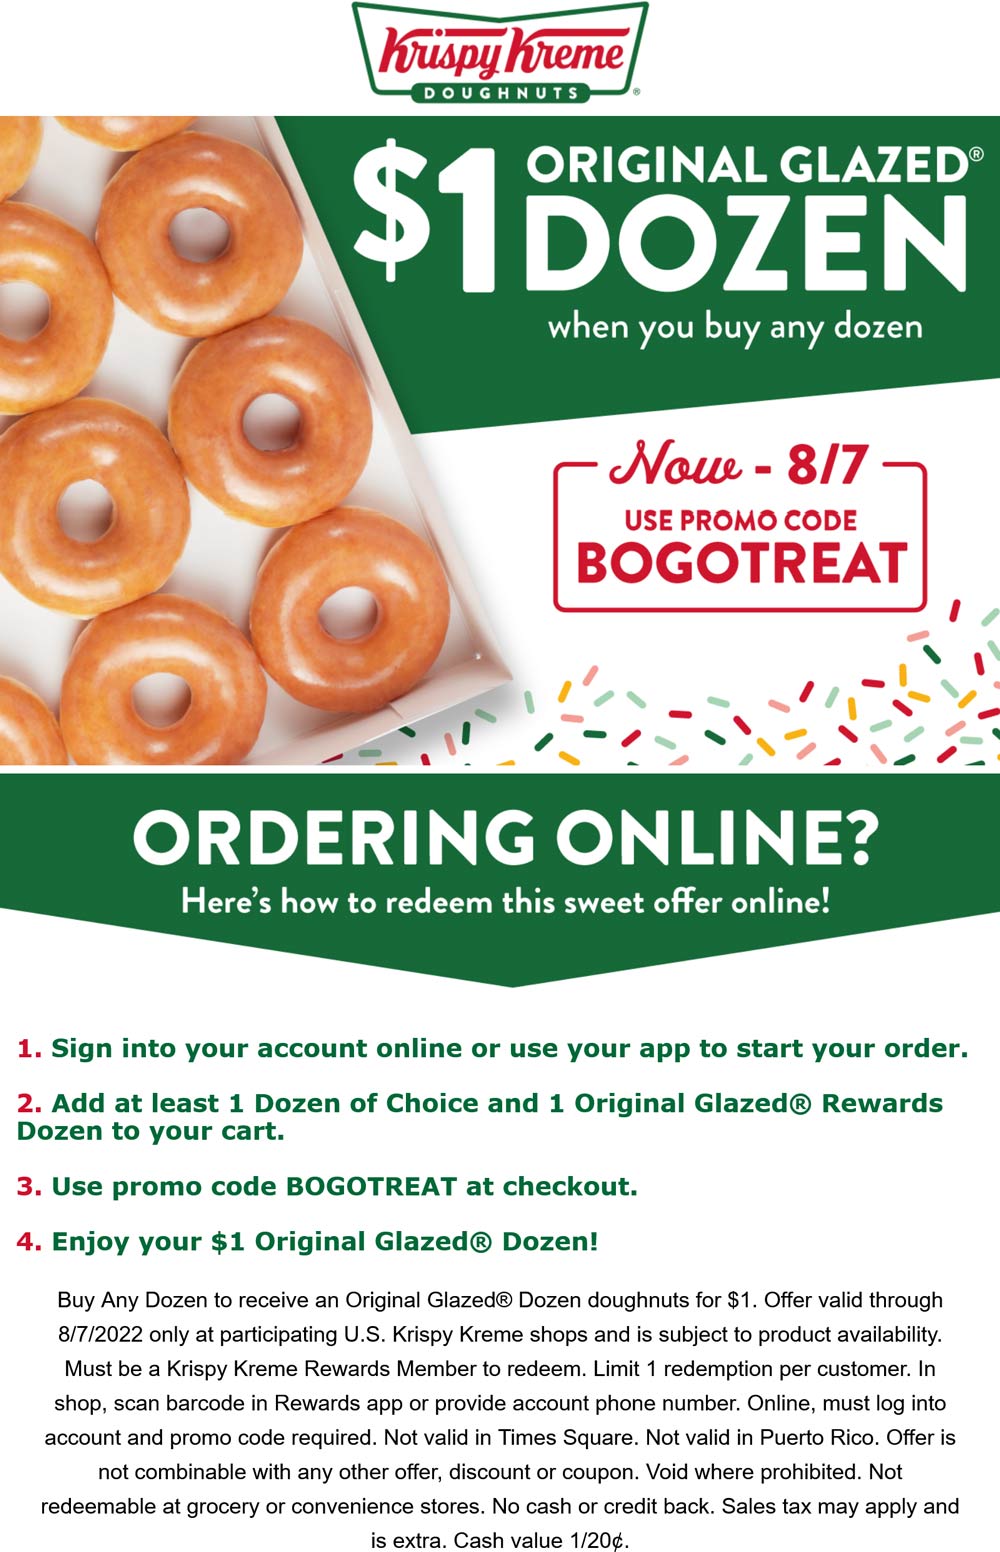 Krispy Kreme restaurants Coupon  Second dozen for $1 via rewards at Krispy Kreme doughnuts promo code BOGOTREAT #krispykreme 